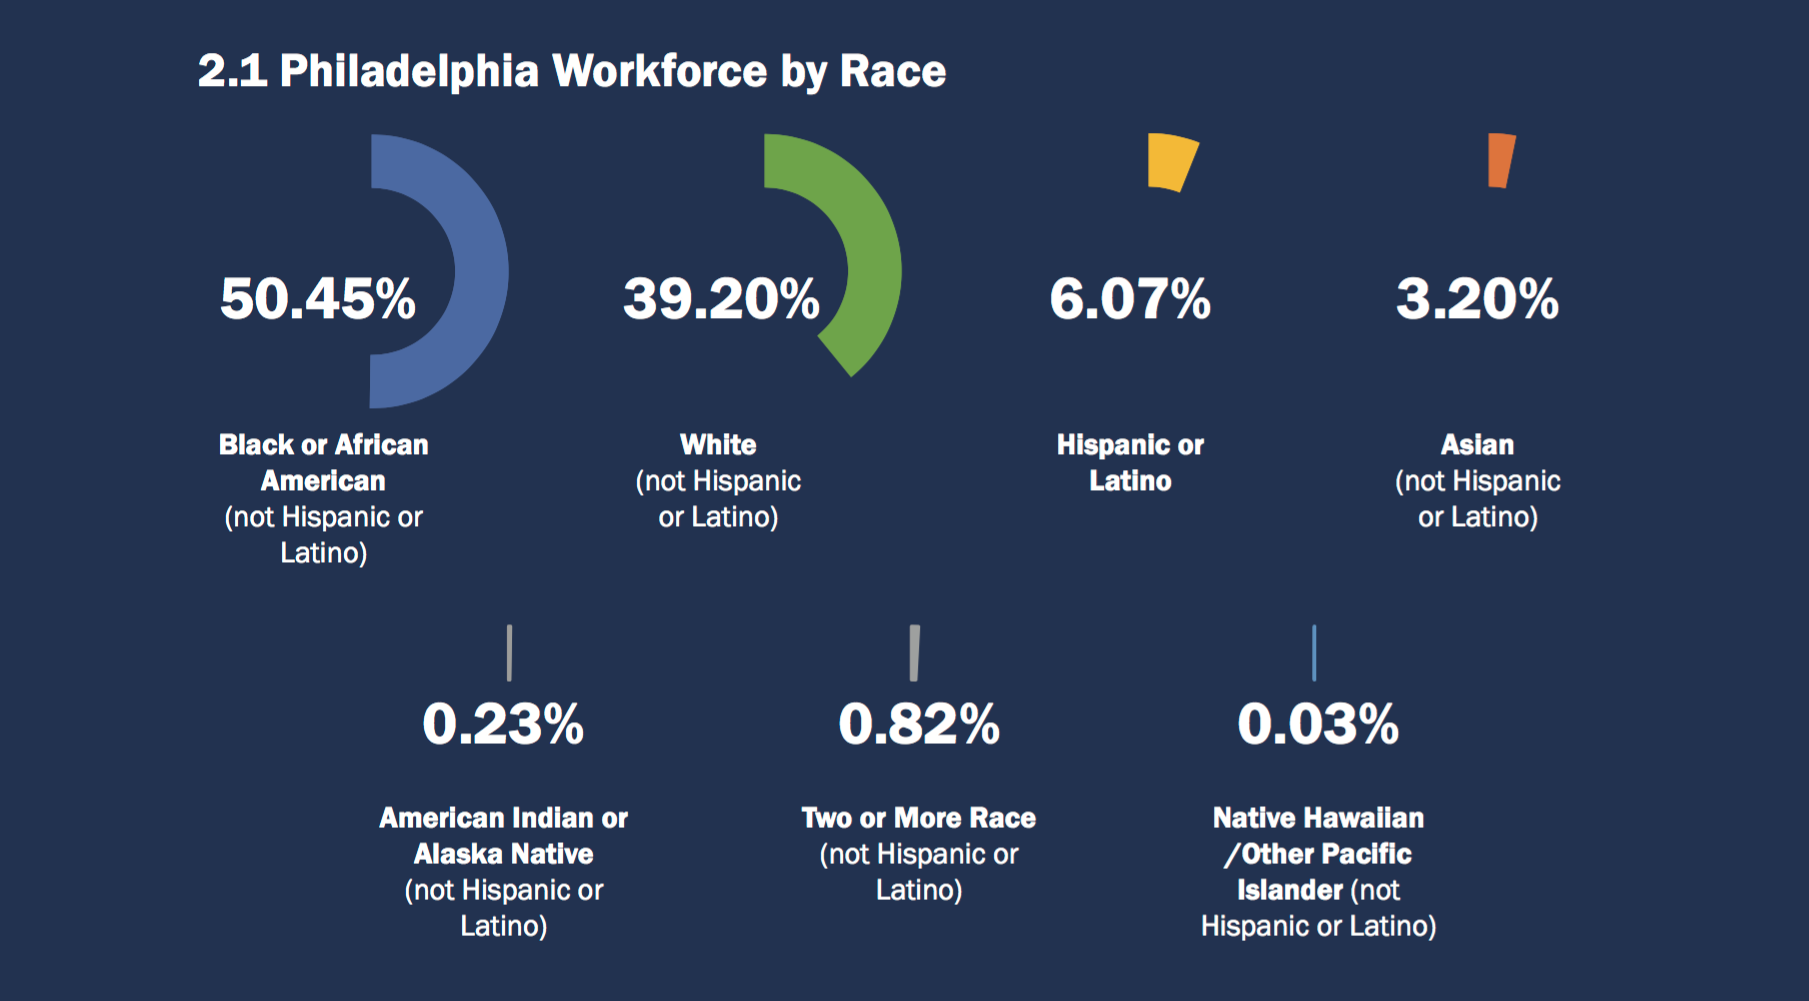 The racial breakdown of the Philadelphia workforce as of June 30, 2017, according to the 2017 Philadelphia Workforce Diversity Profile Report